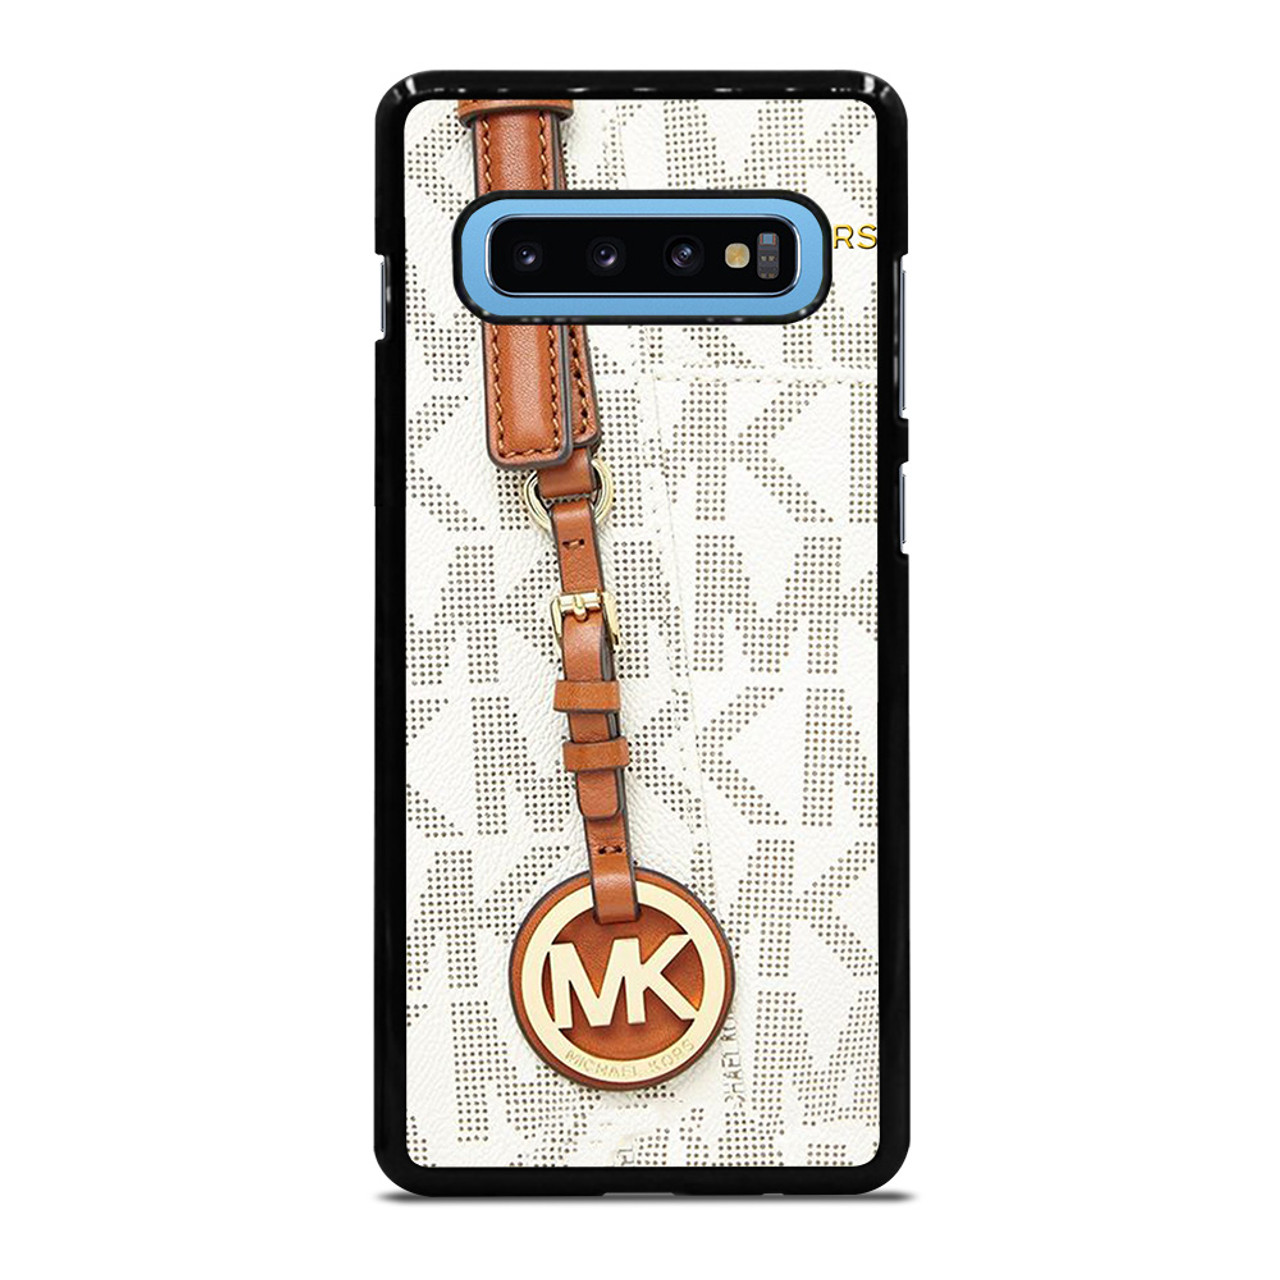 MICHAEL KORS MK WHITE 2 Samsung Galaxy S10 Plus Case Cover